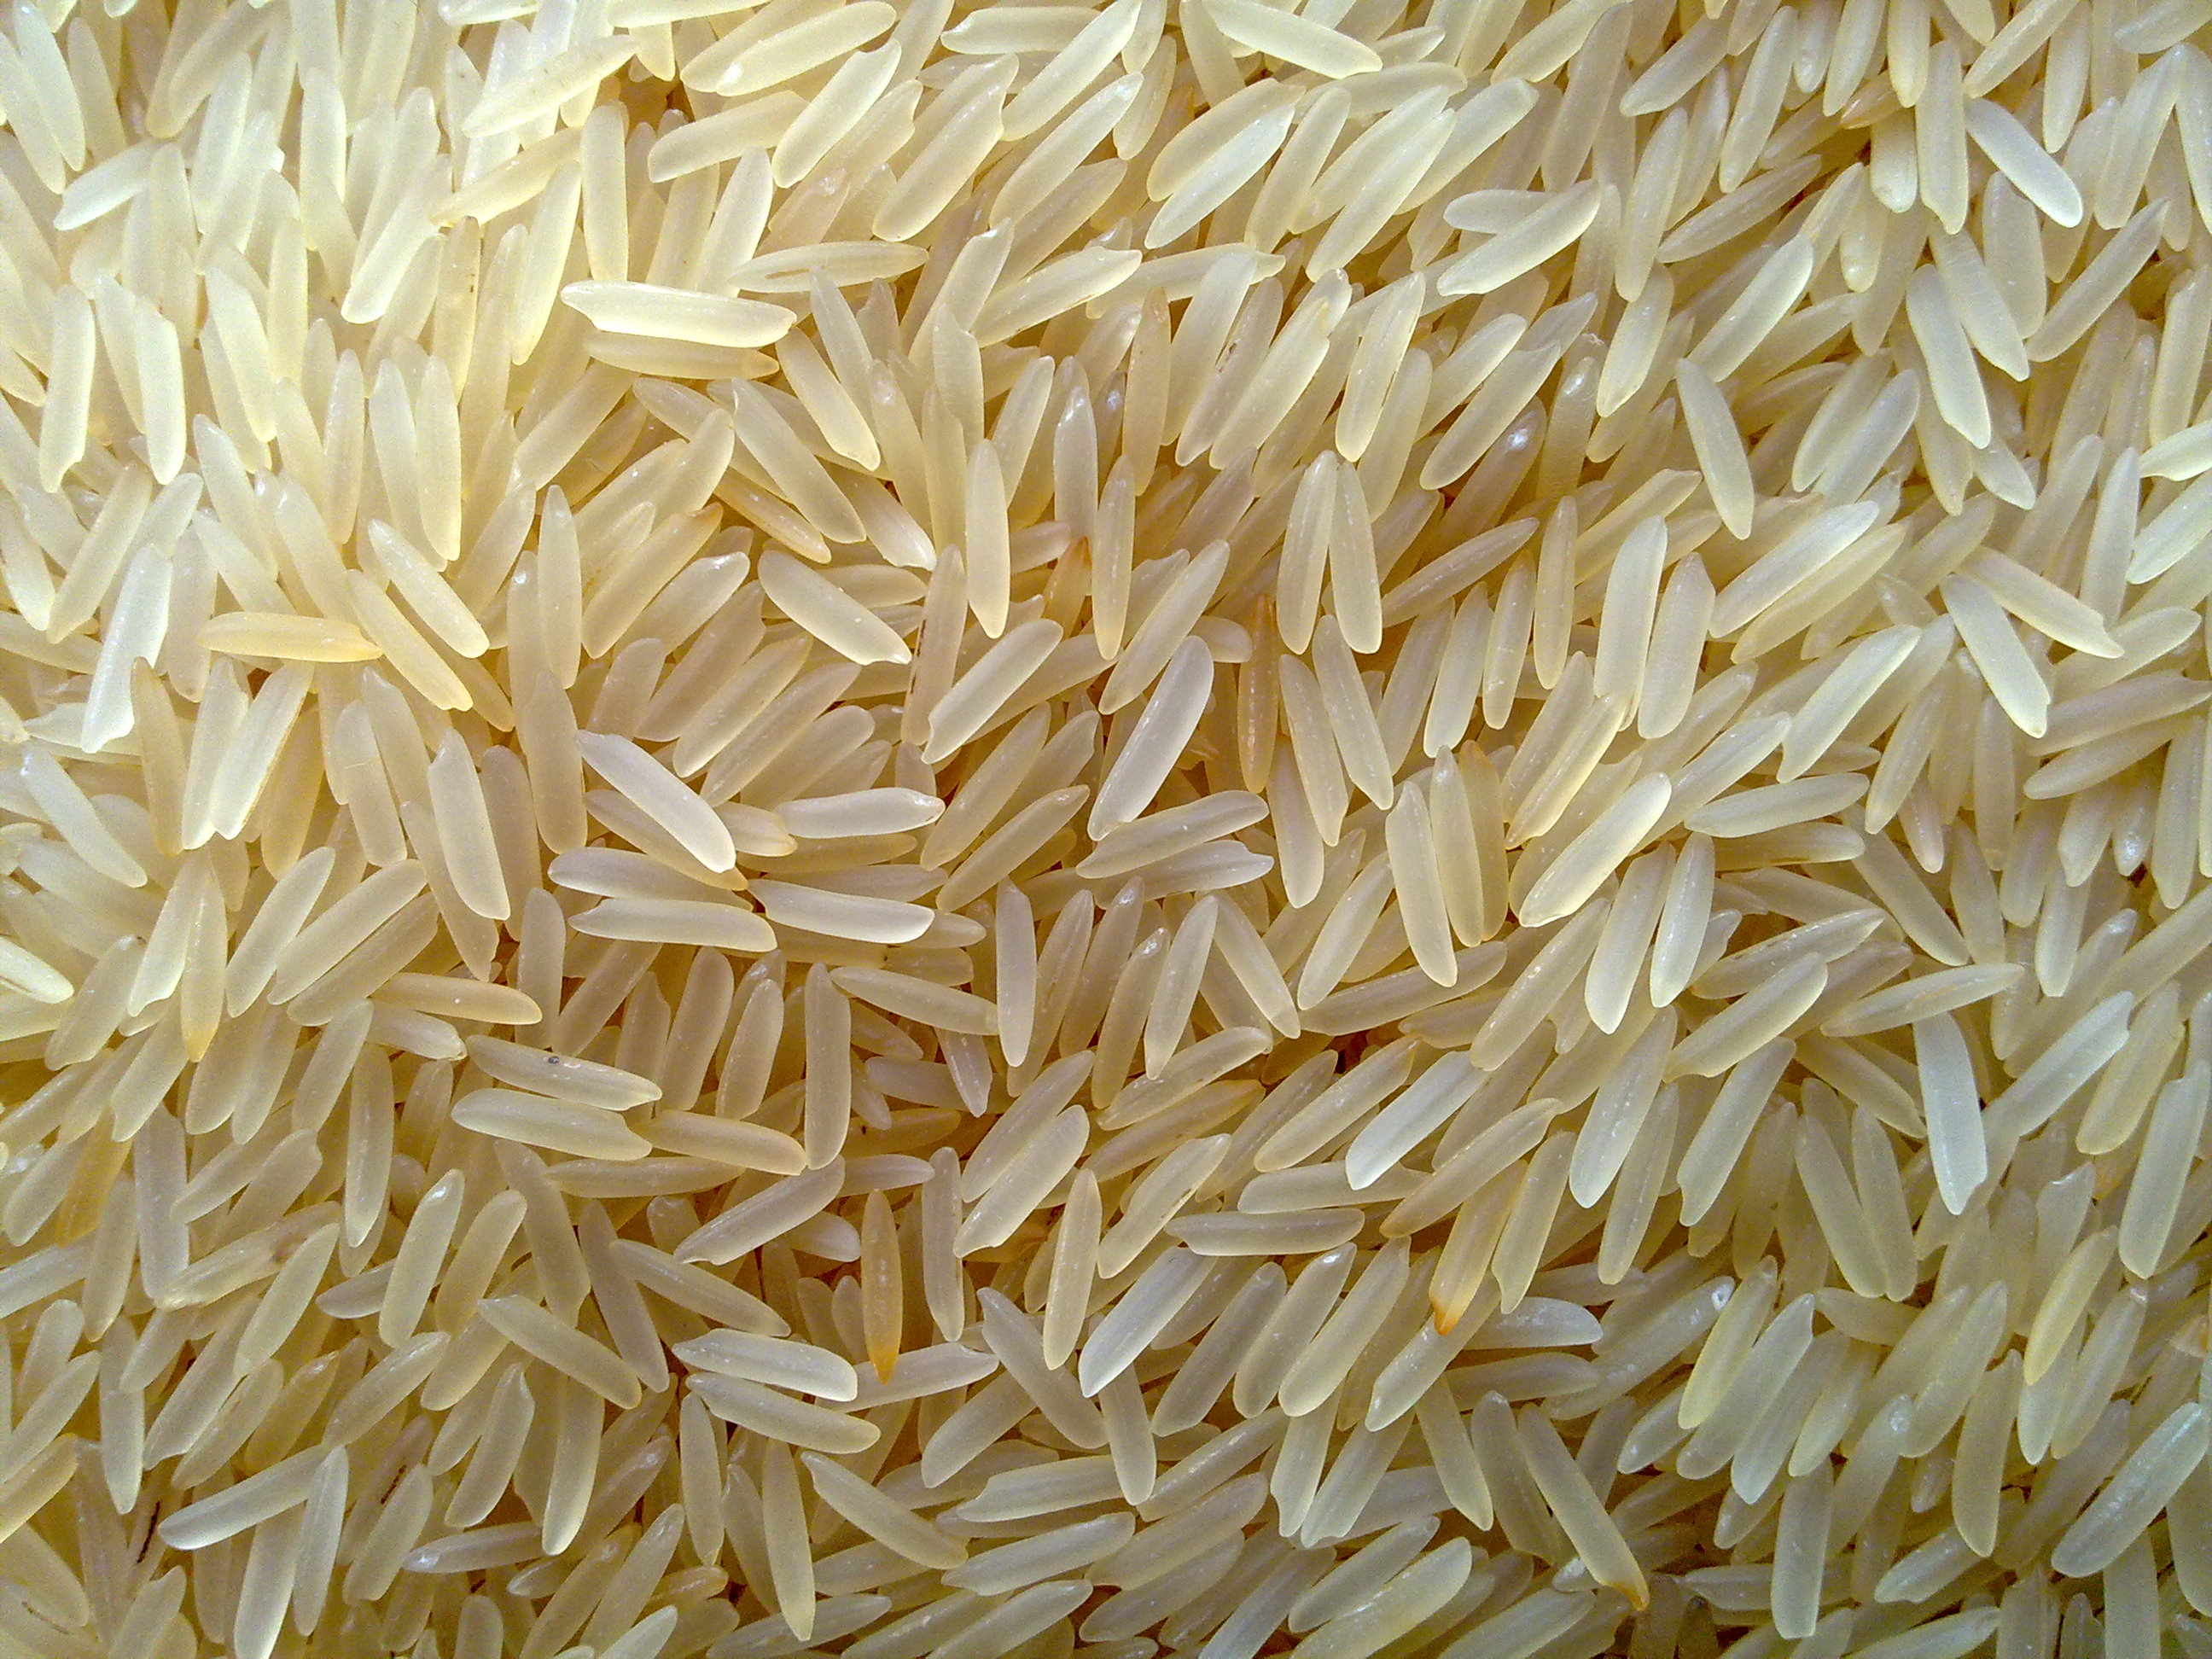 Generation Iron Rice